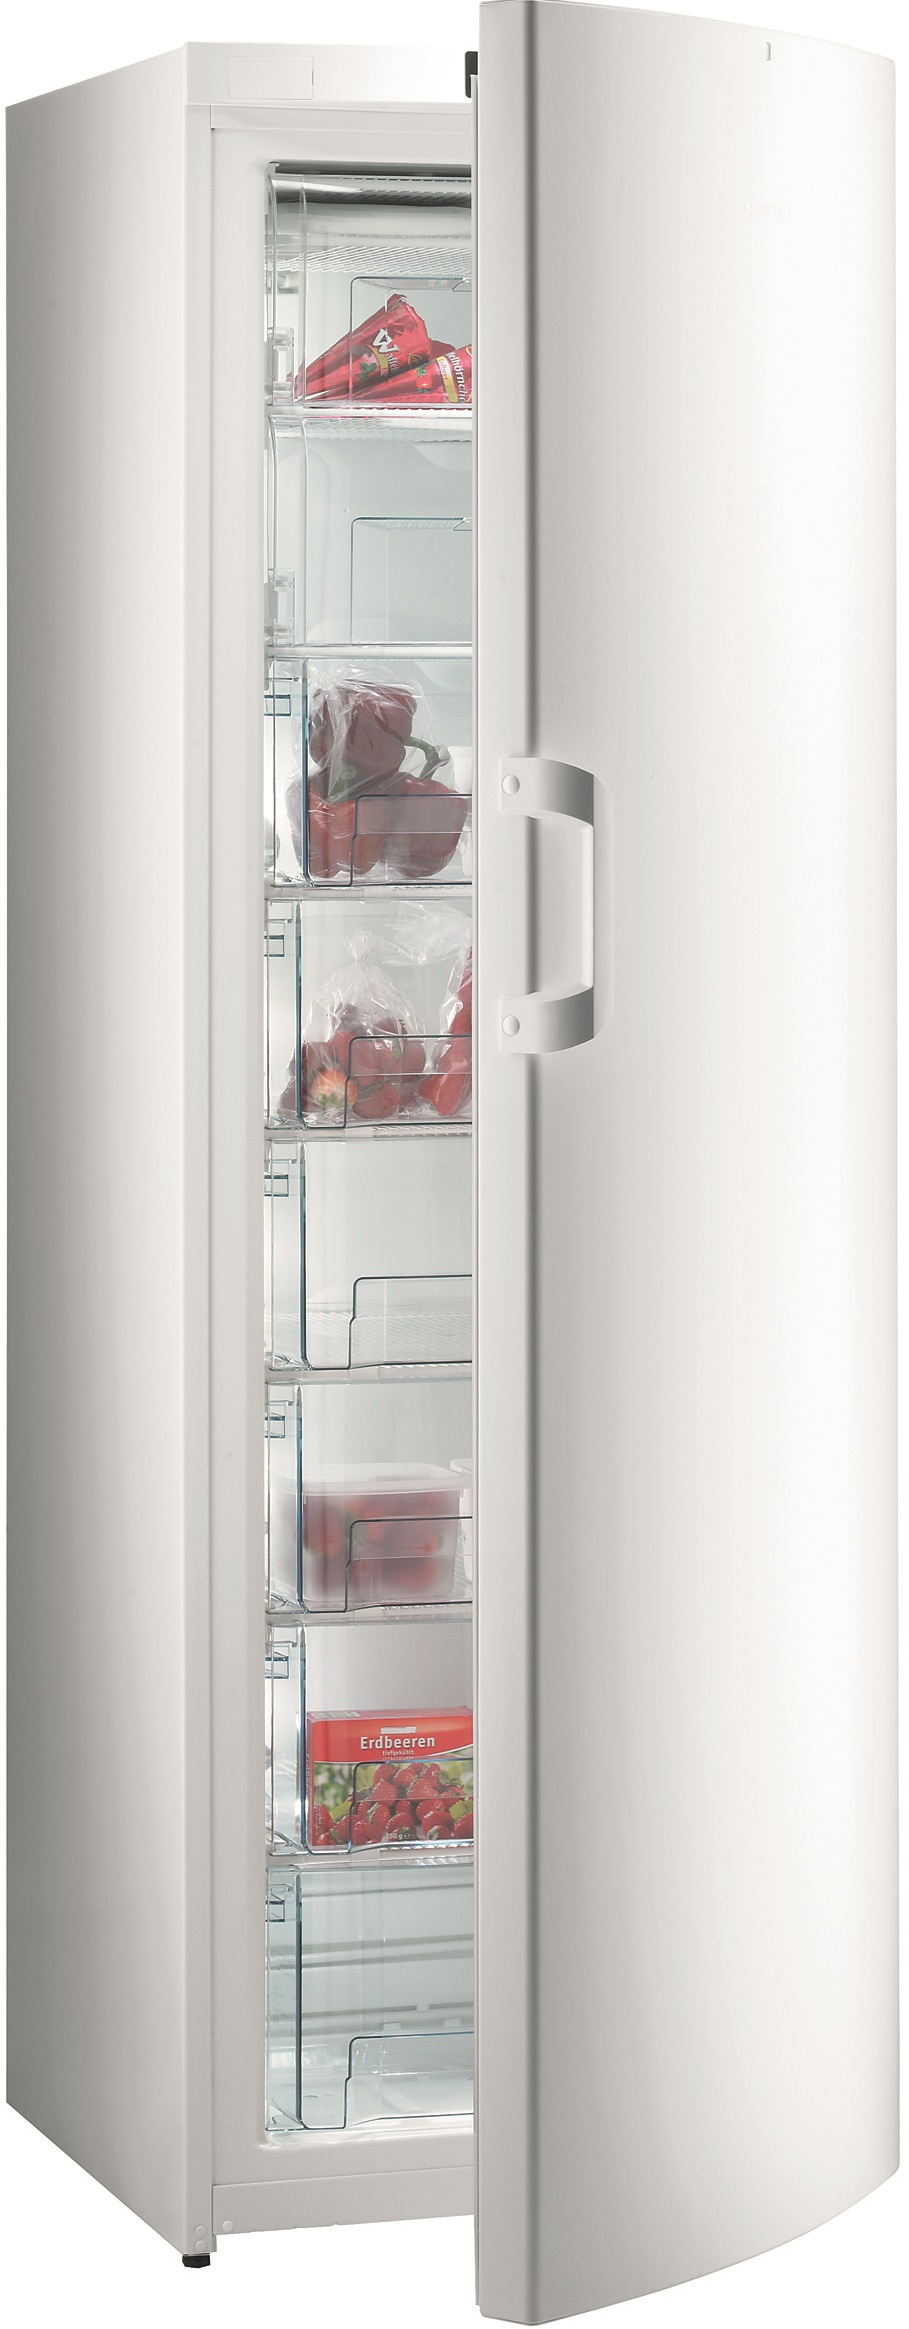 Морозильный шкаф Gorenje F 6181 AW